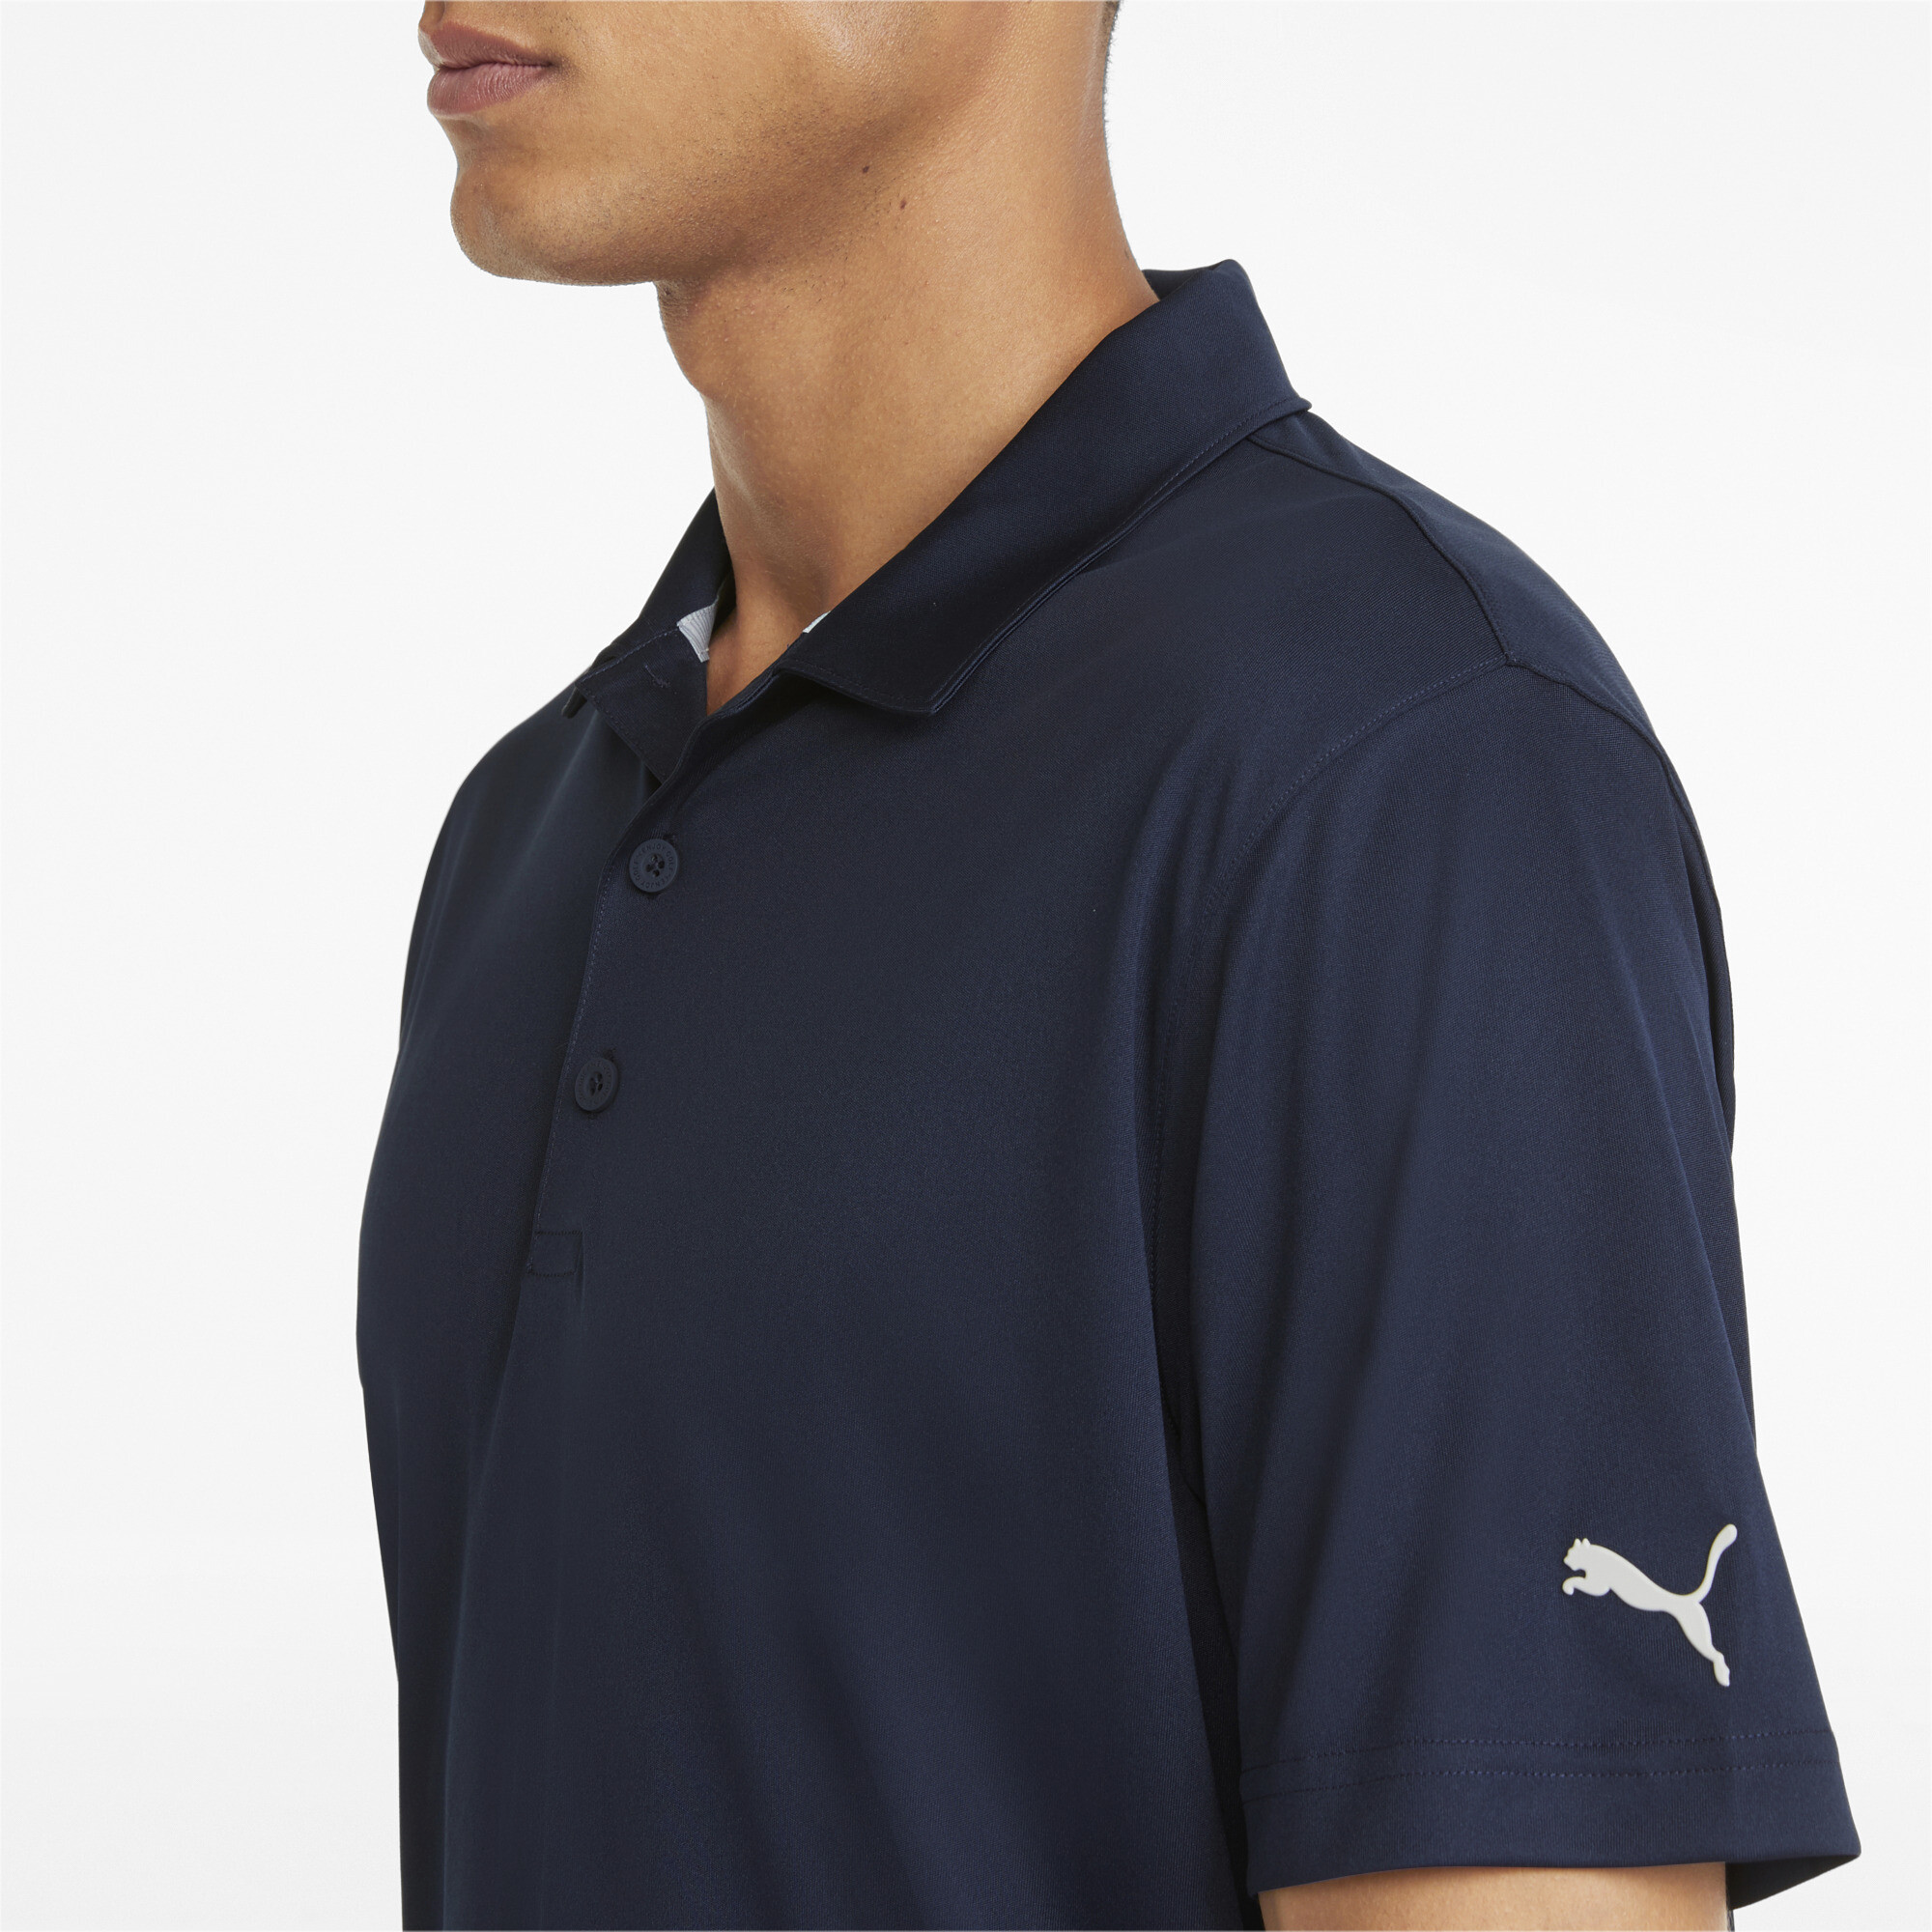 Men's Puma Gamer's Golf Polo Shirt T-Shirt, Blue T-Shirt, Size 4XL T-Shirt, Clothing